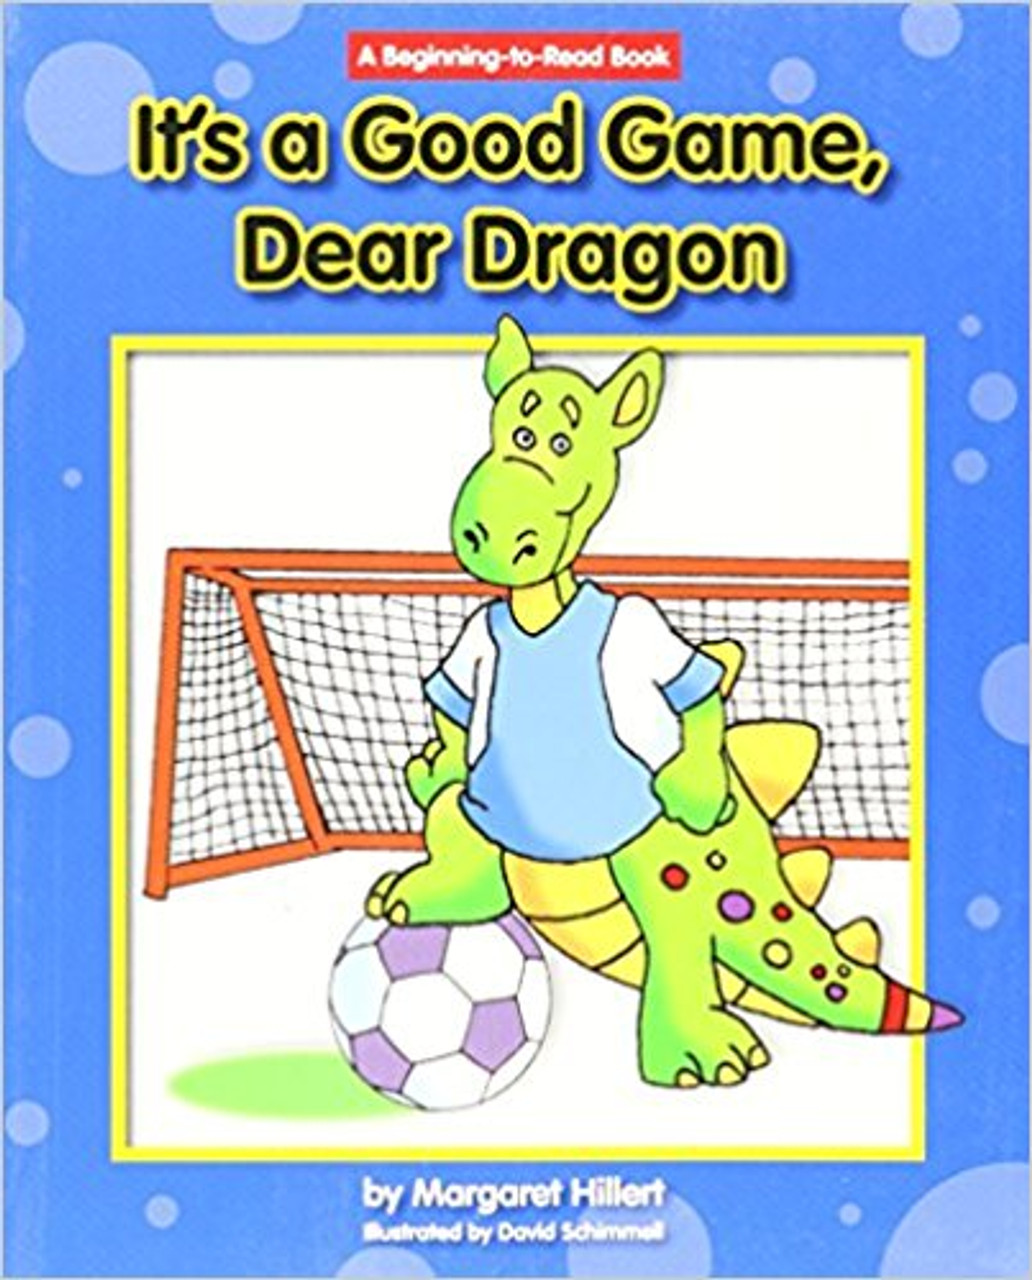 It's a Good Game, Dear Dragon by Margaret Hillert